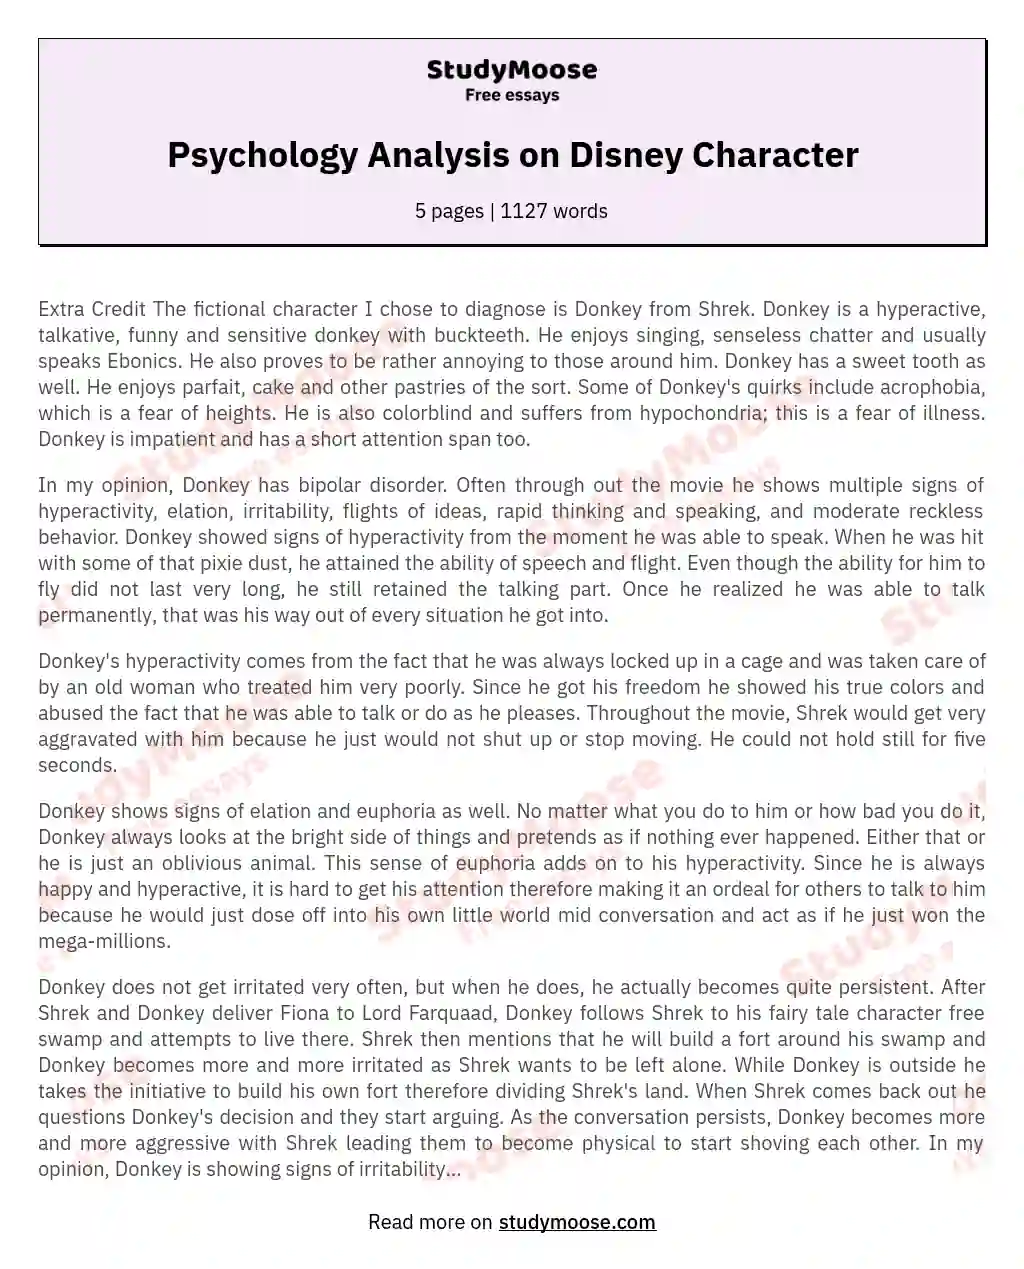 Psychology Analysis on Disney Character essay